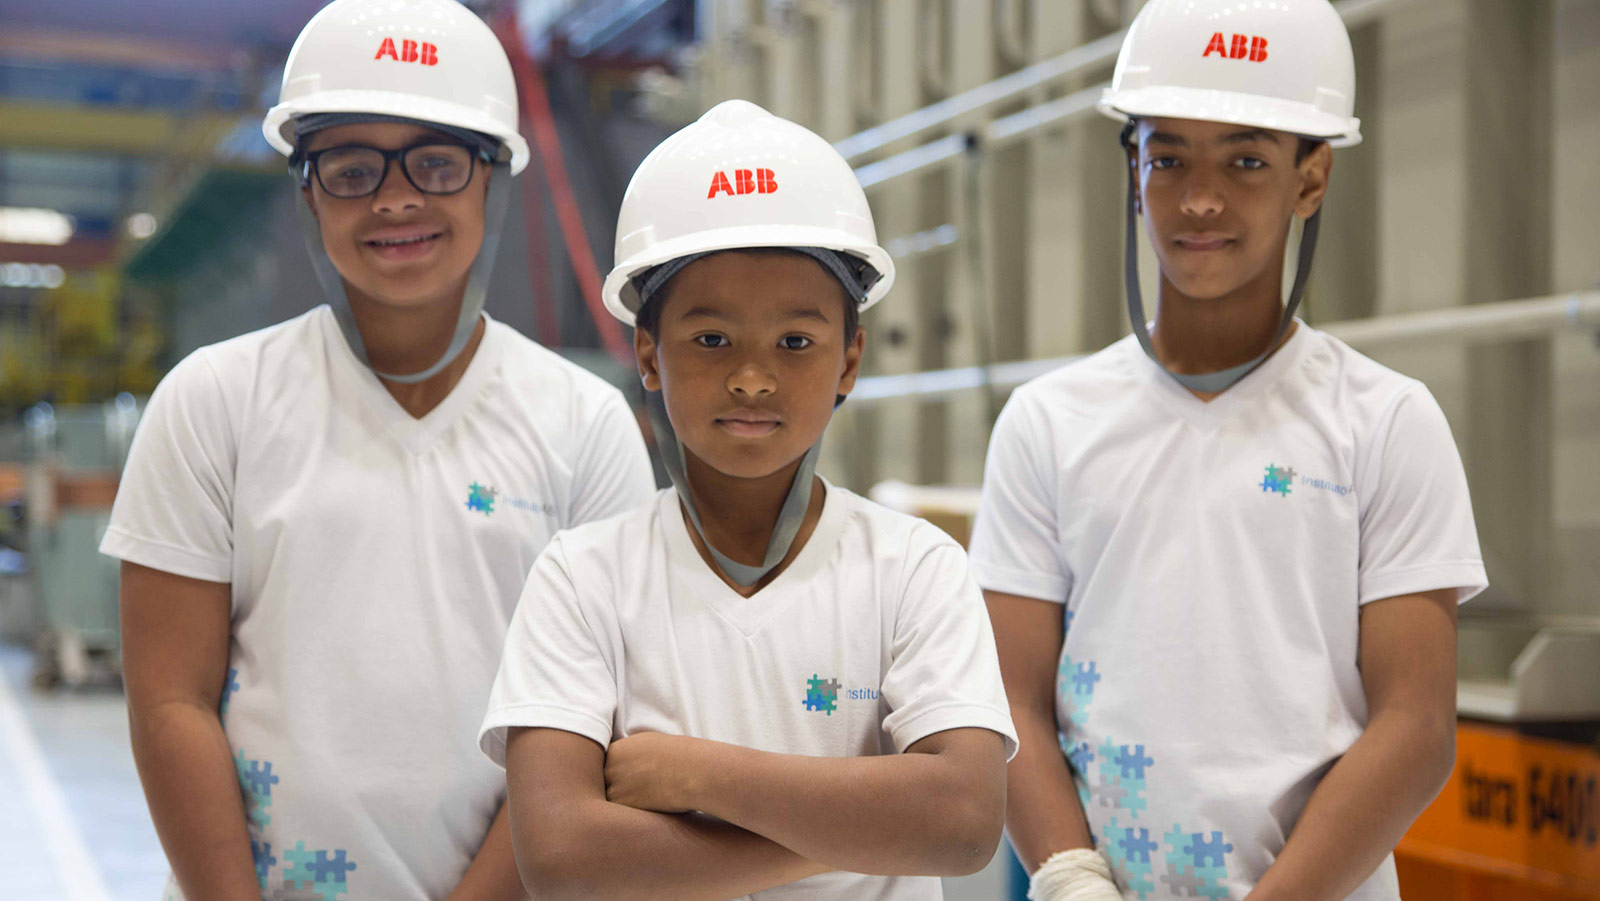 Kids with ABB helmets (photo)